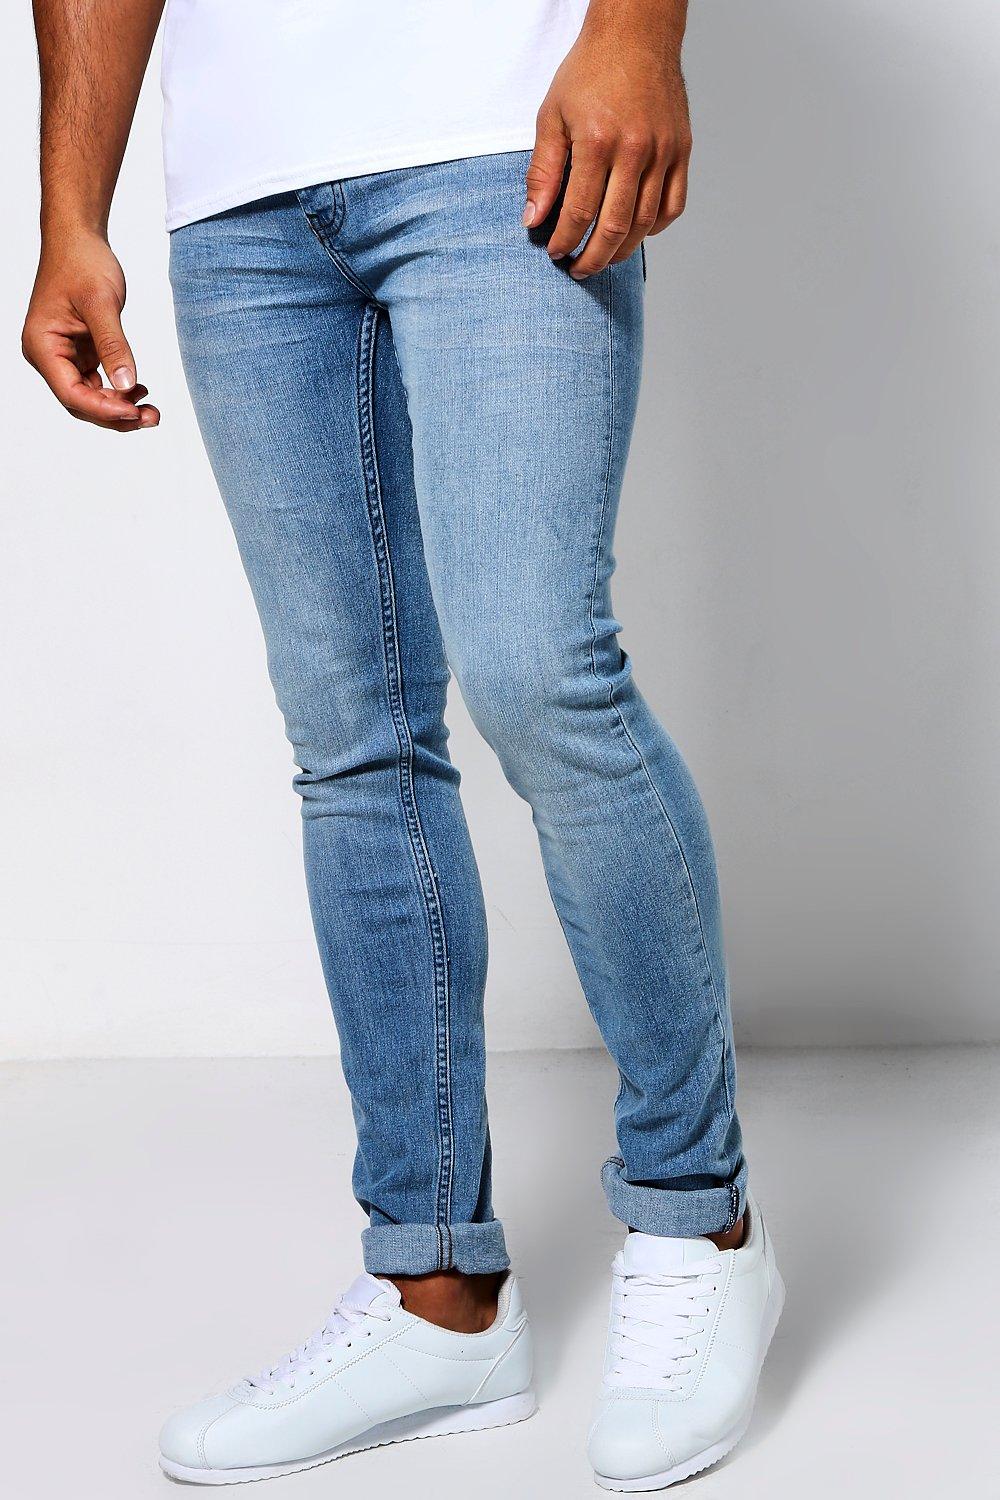 brand jeans price